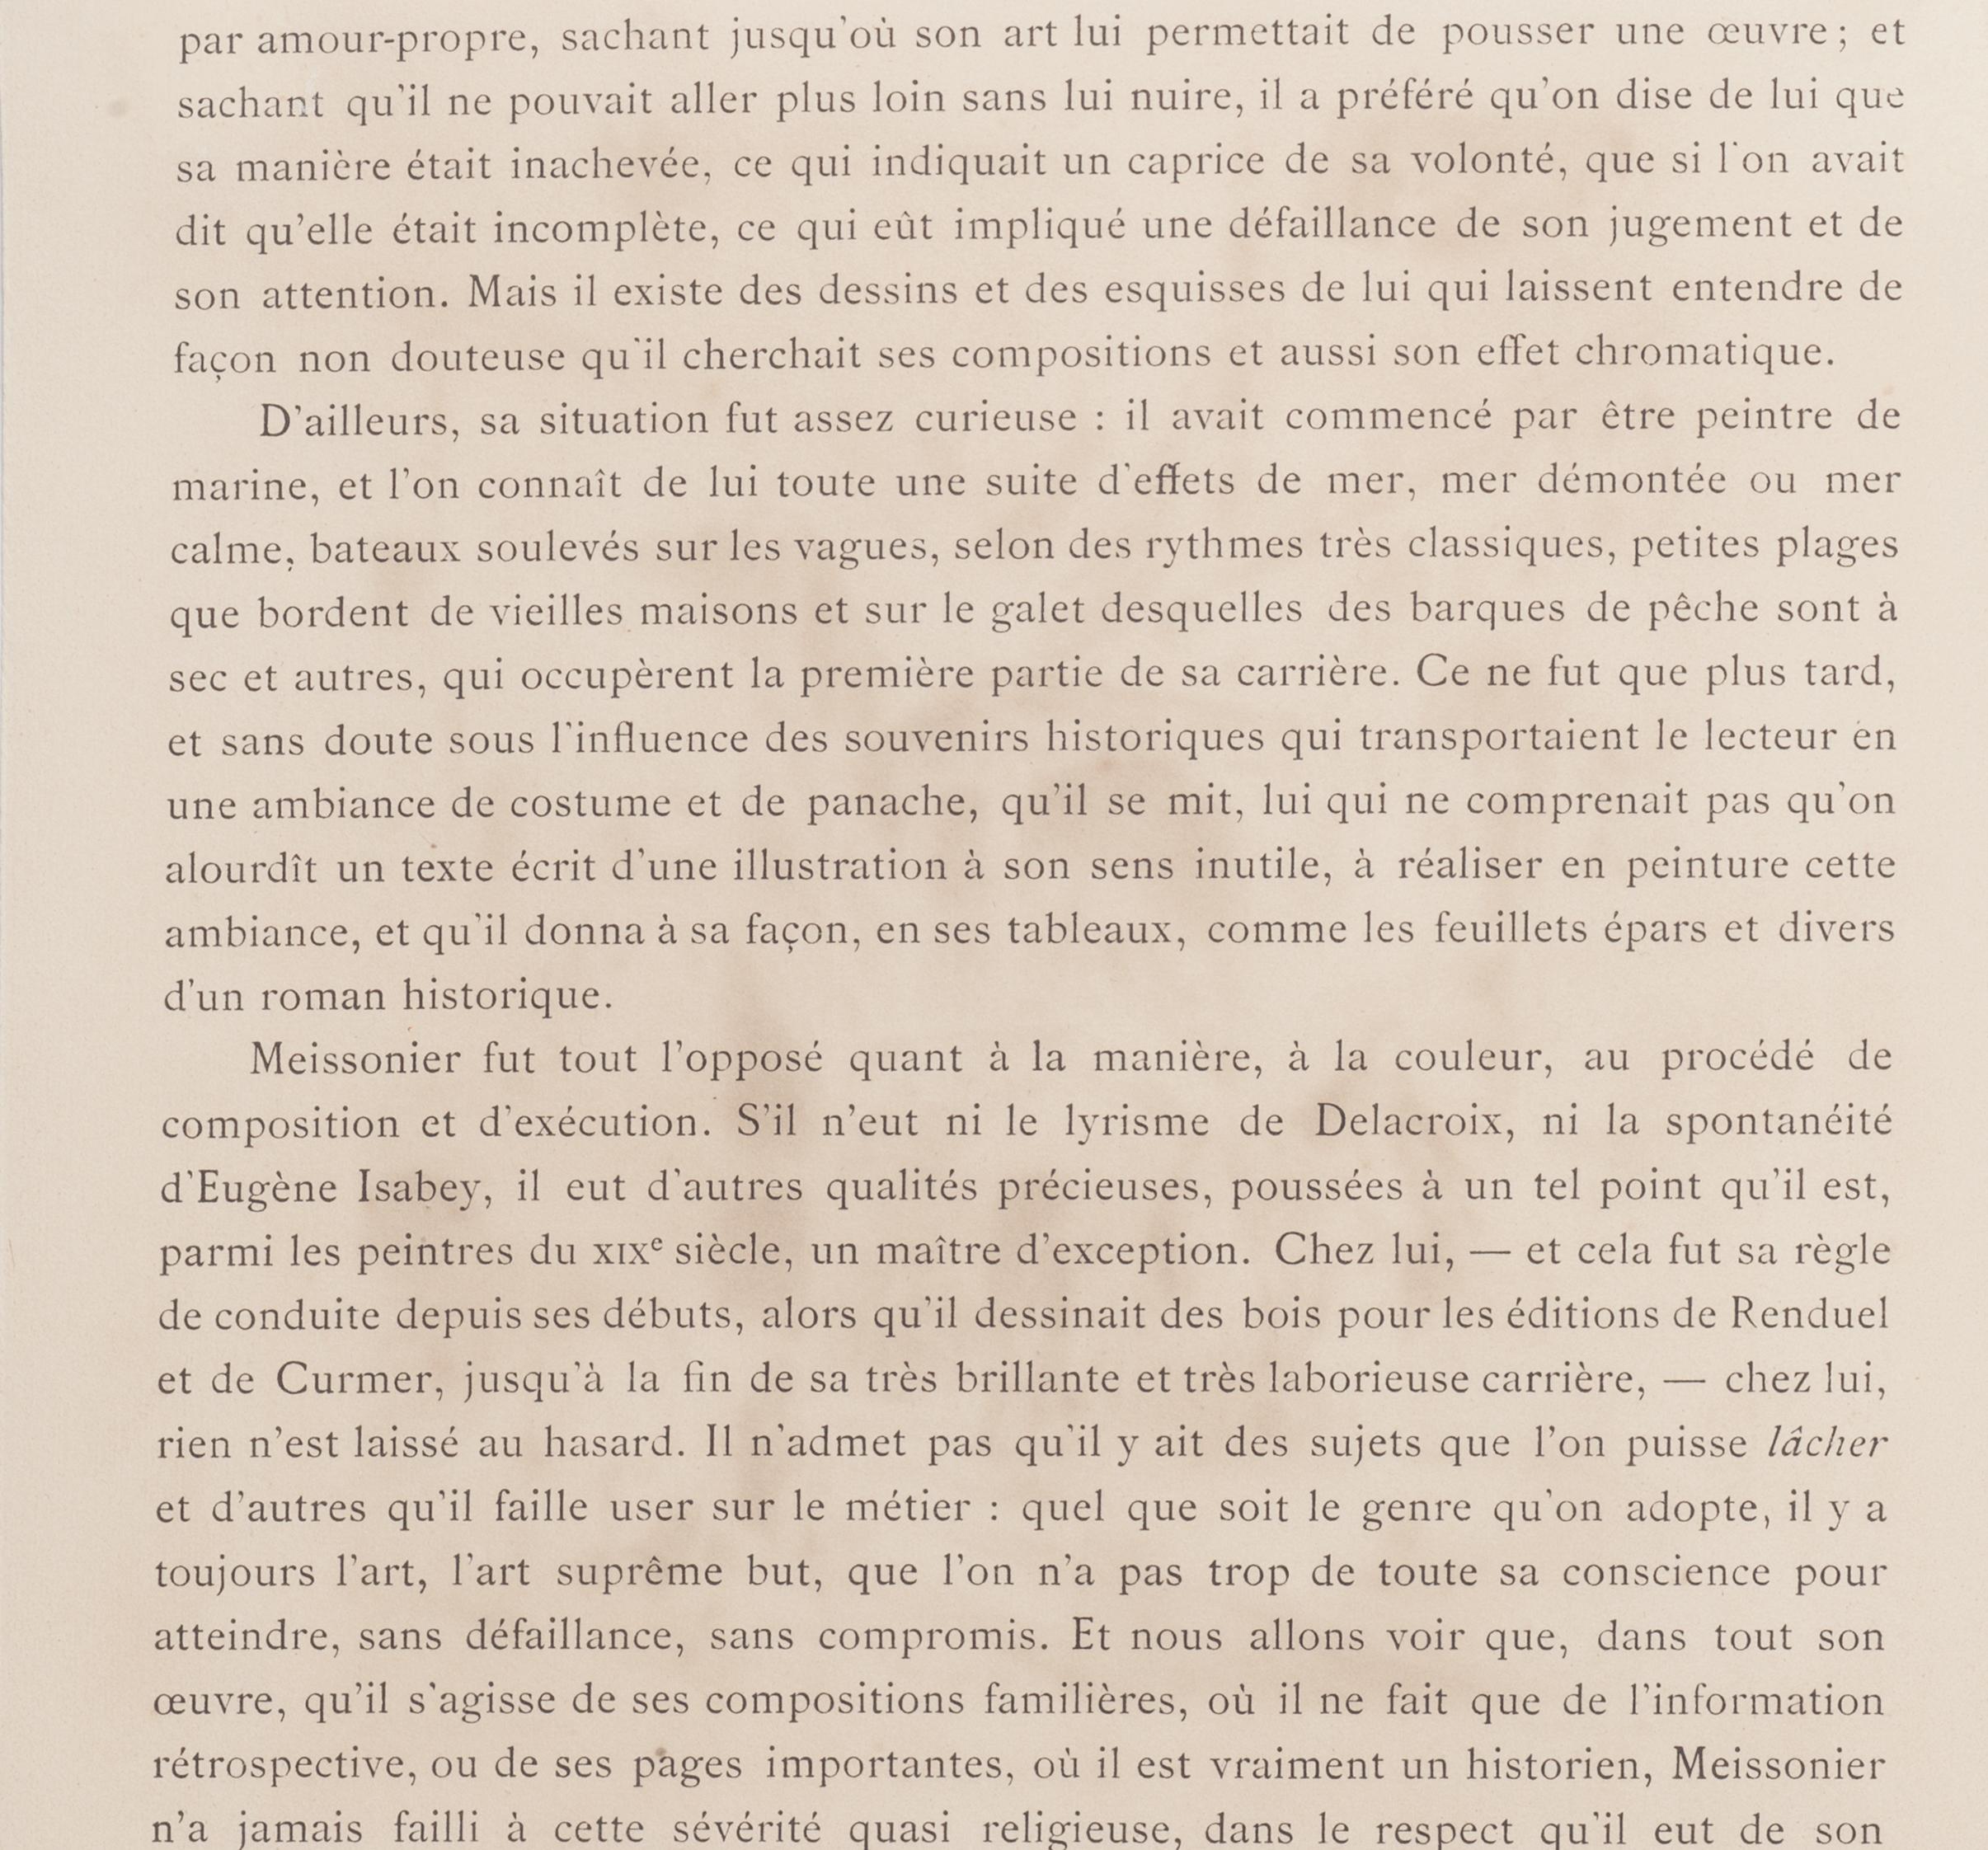 Le Message - Original Etching by H.-C. Toussaint after E. Isabey - 1880 - Print by Henri-Charles Toussaint